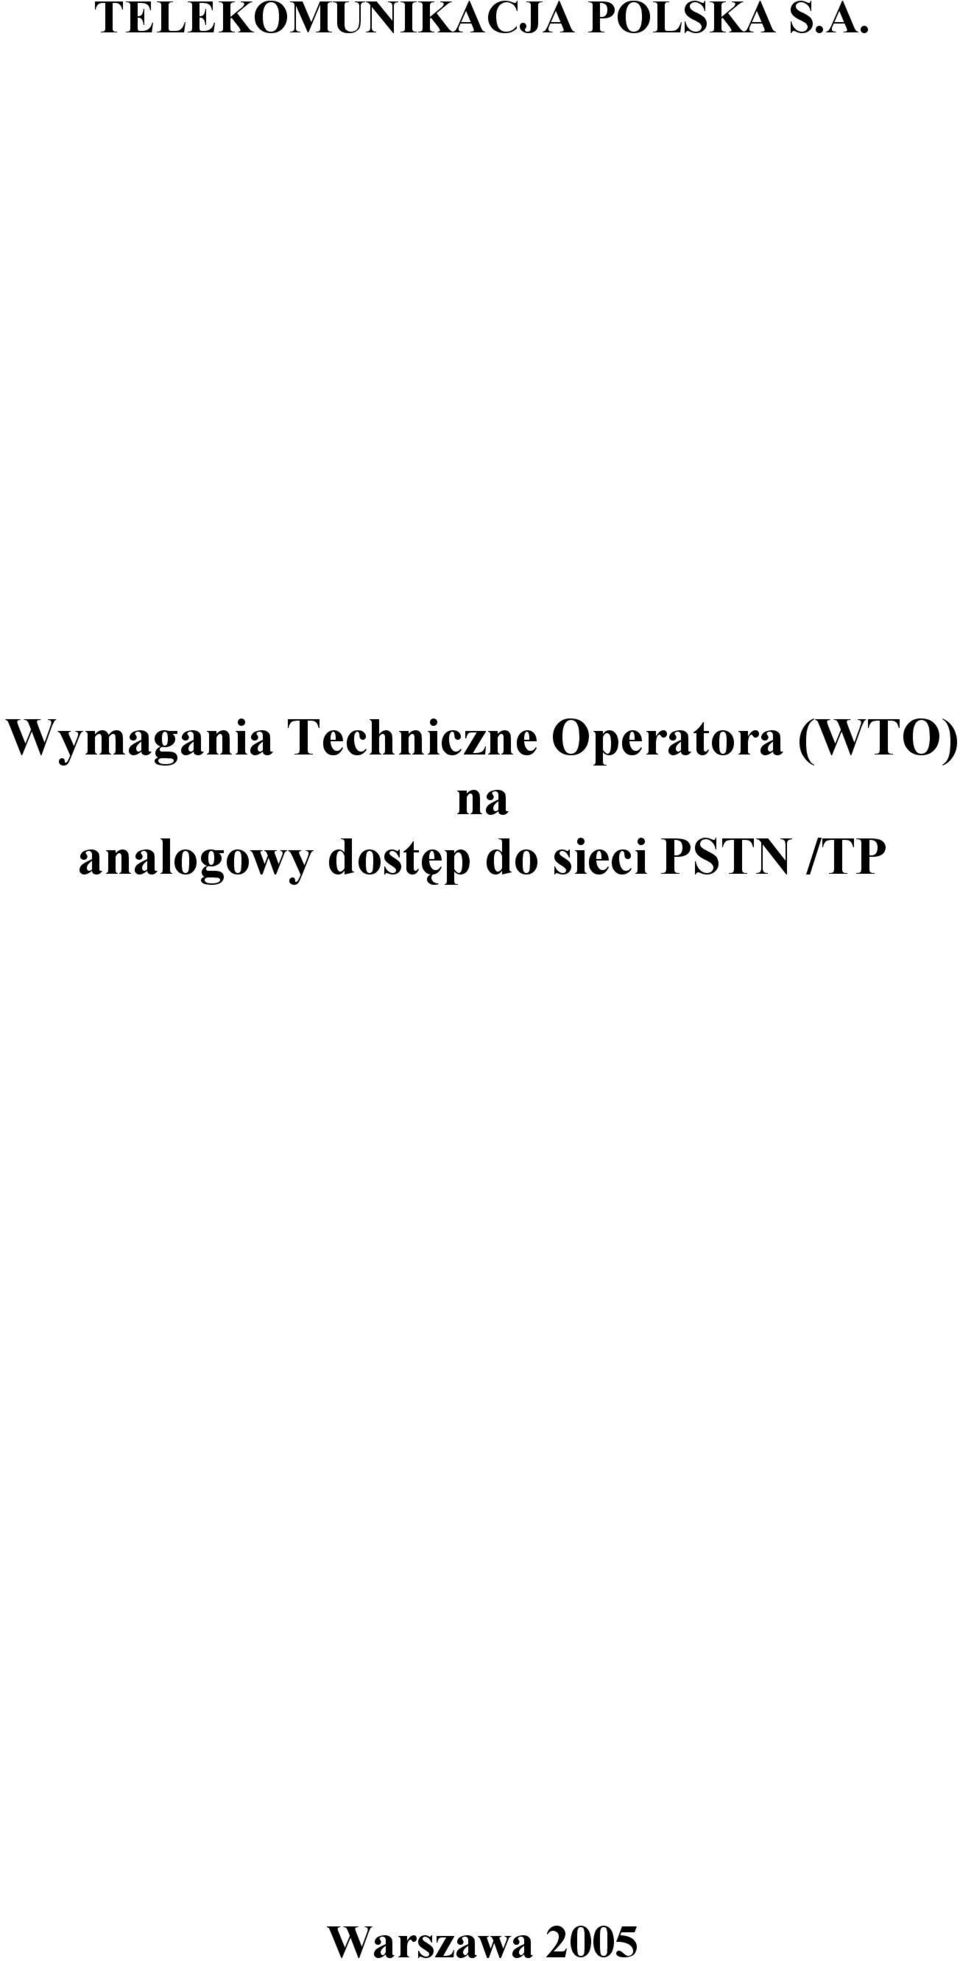 Techniczne Operatora (WTO)